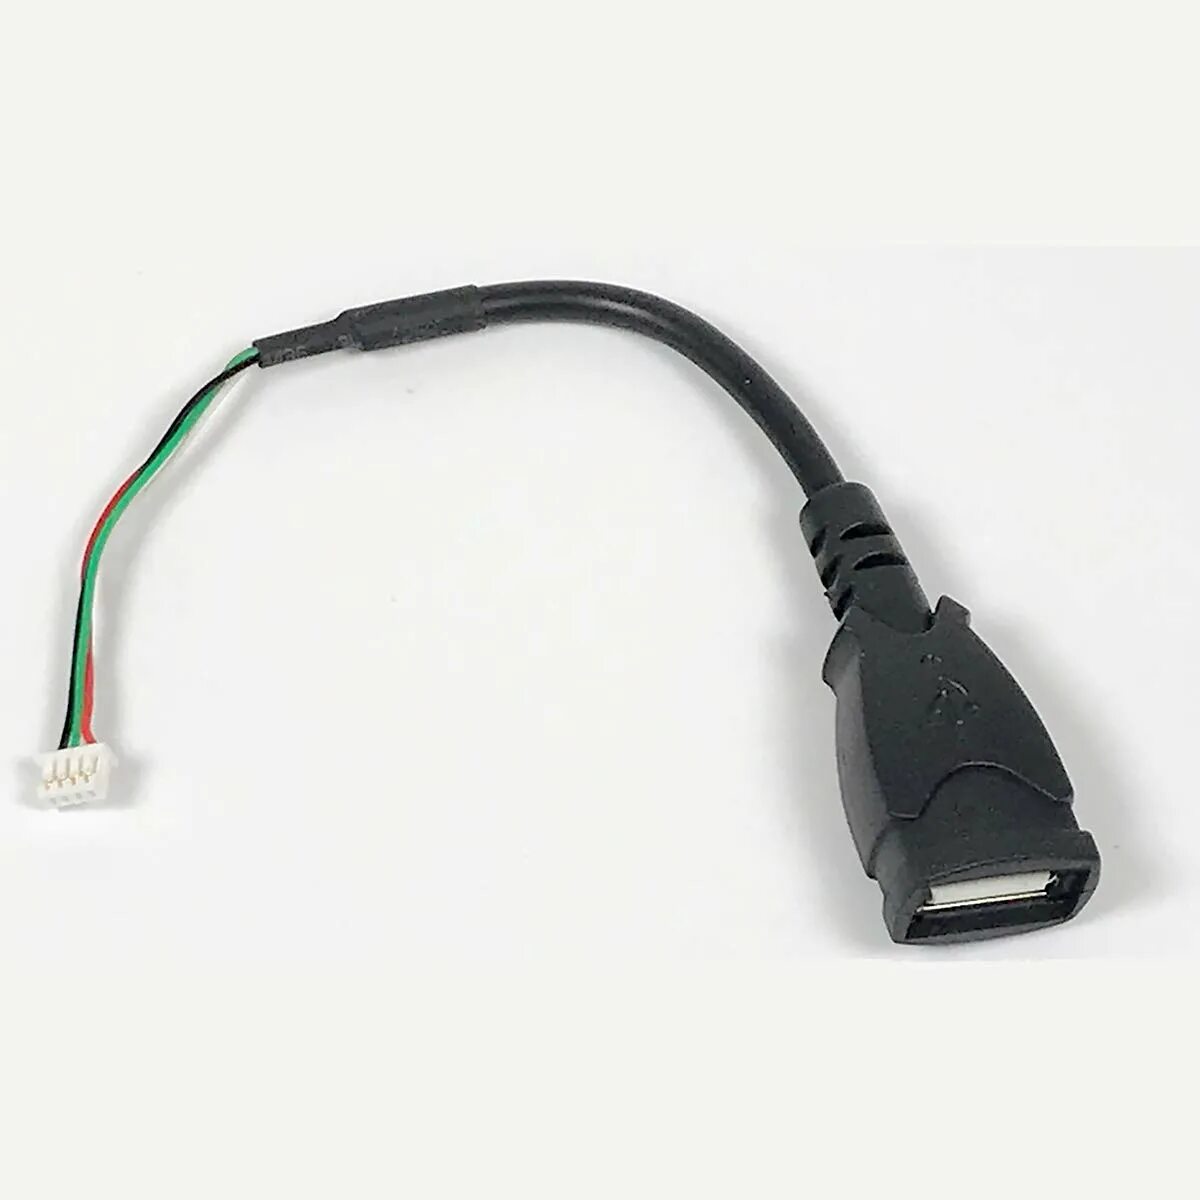 Коннектор USB 4 Pin. Micro USB коннектор 4 Pin. Внутренний USB SATA Connector. USB-A female to 4-Pin Internal USB Connector 1.25mm. Usb 4 канала